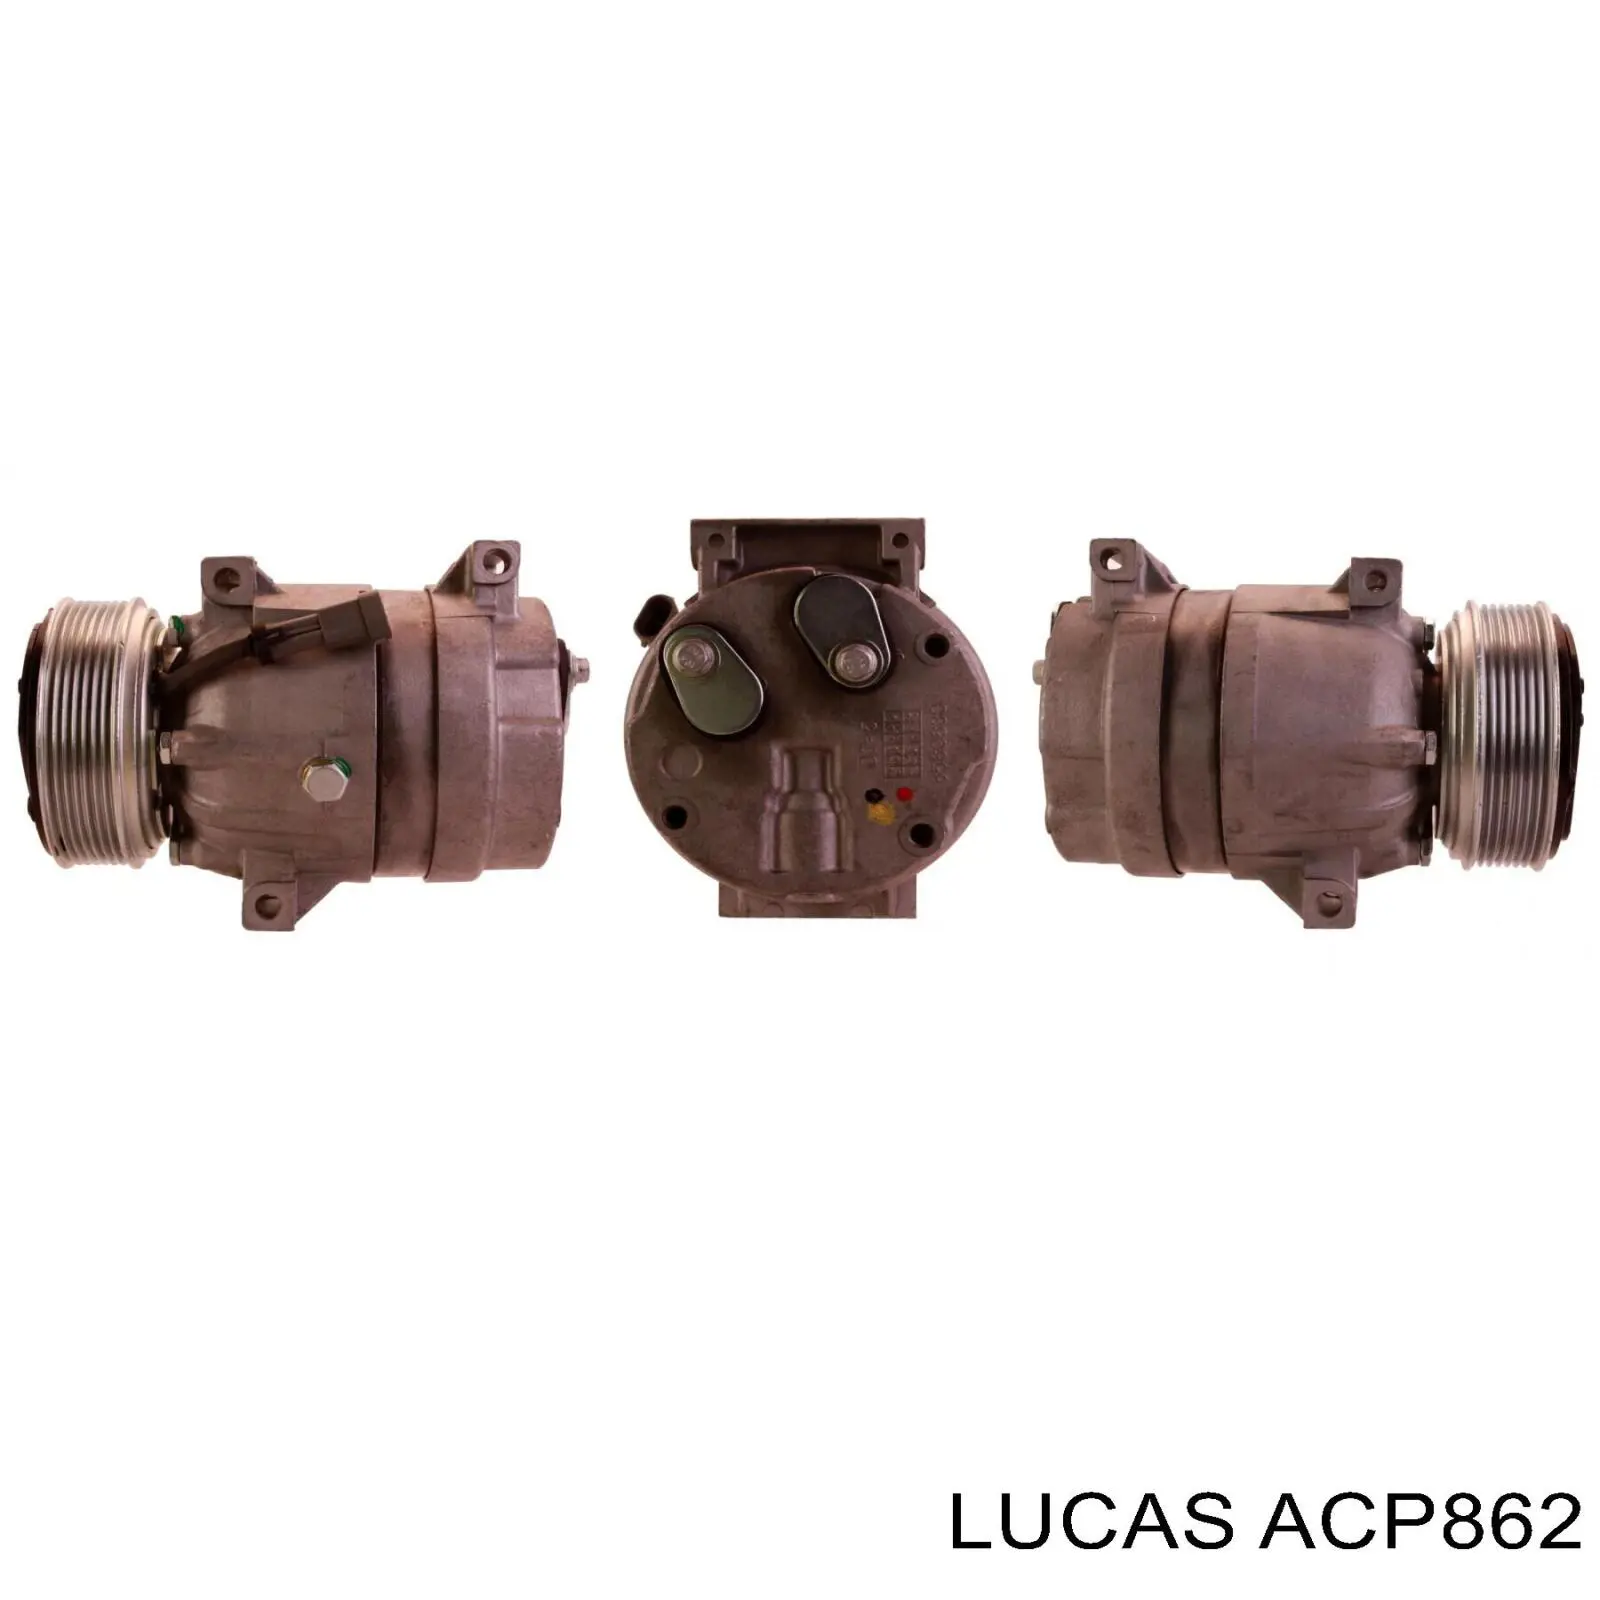 Compresor de aire acondicionado ACP862 Lucas